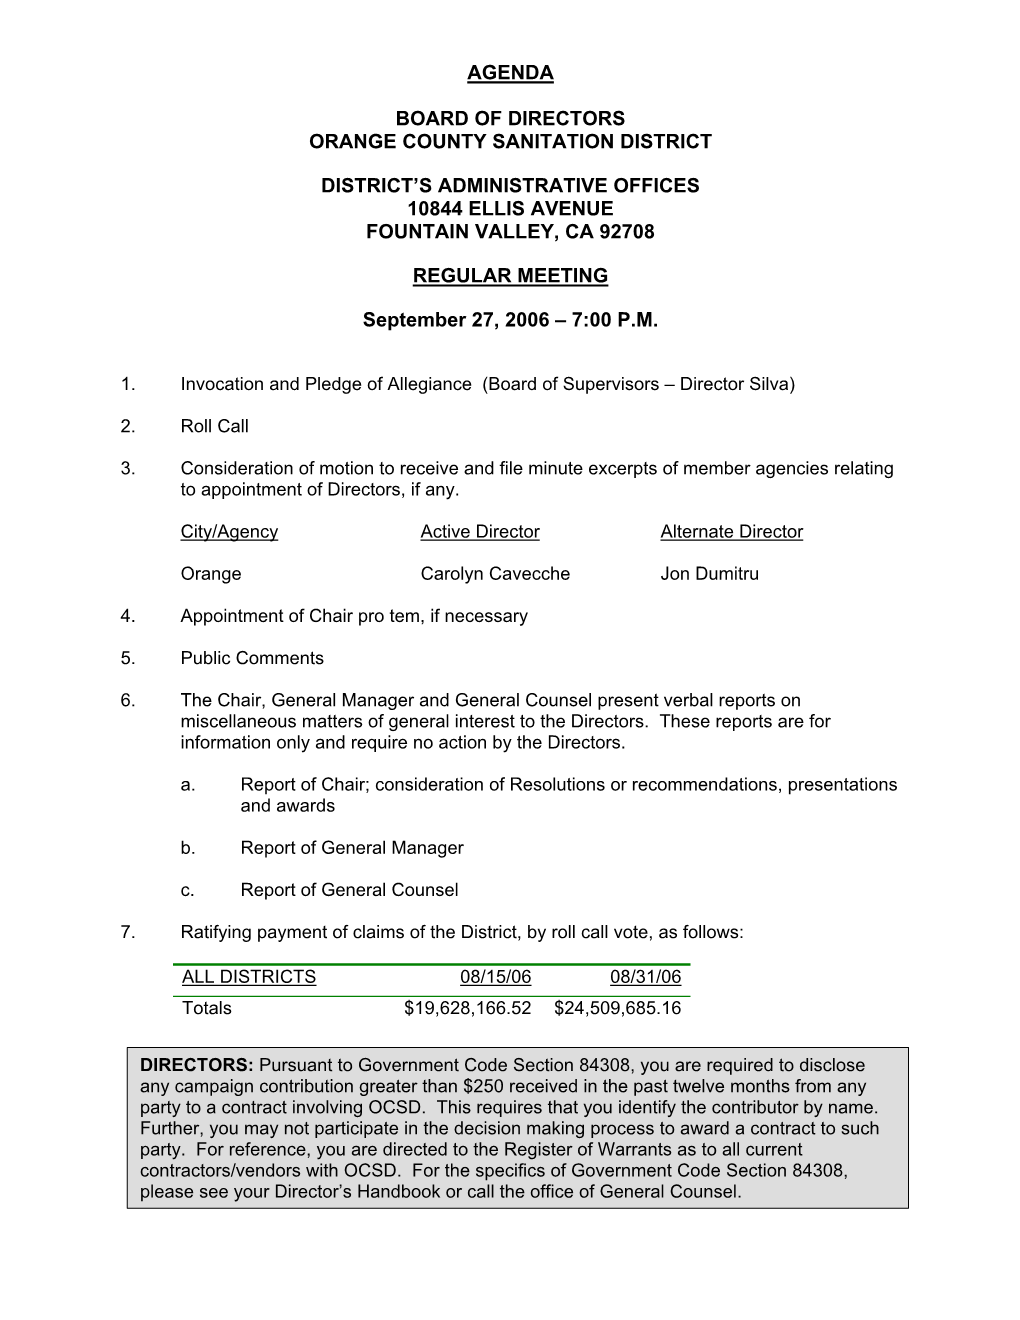 Agenda Board of Directors Orange County Sanitation